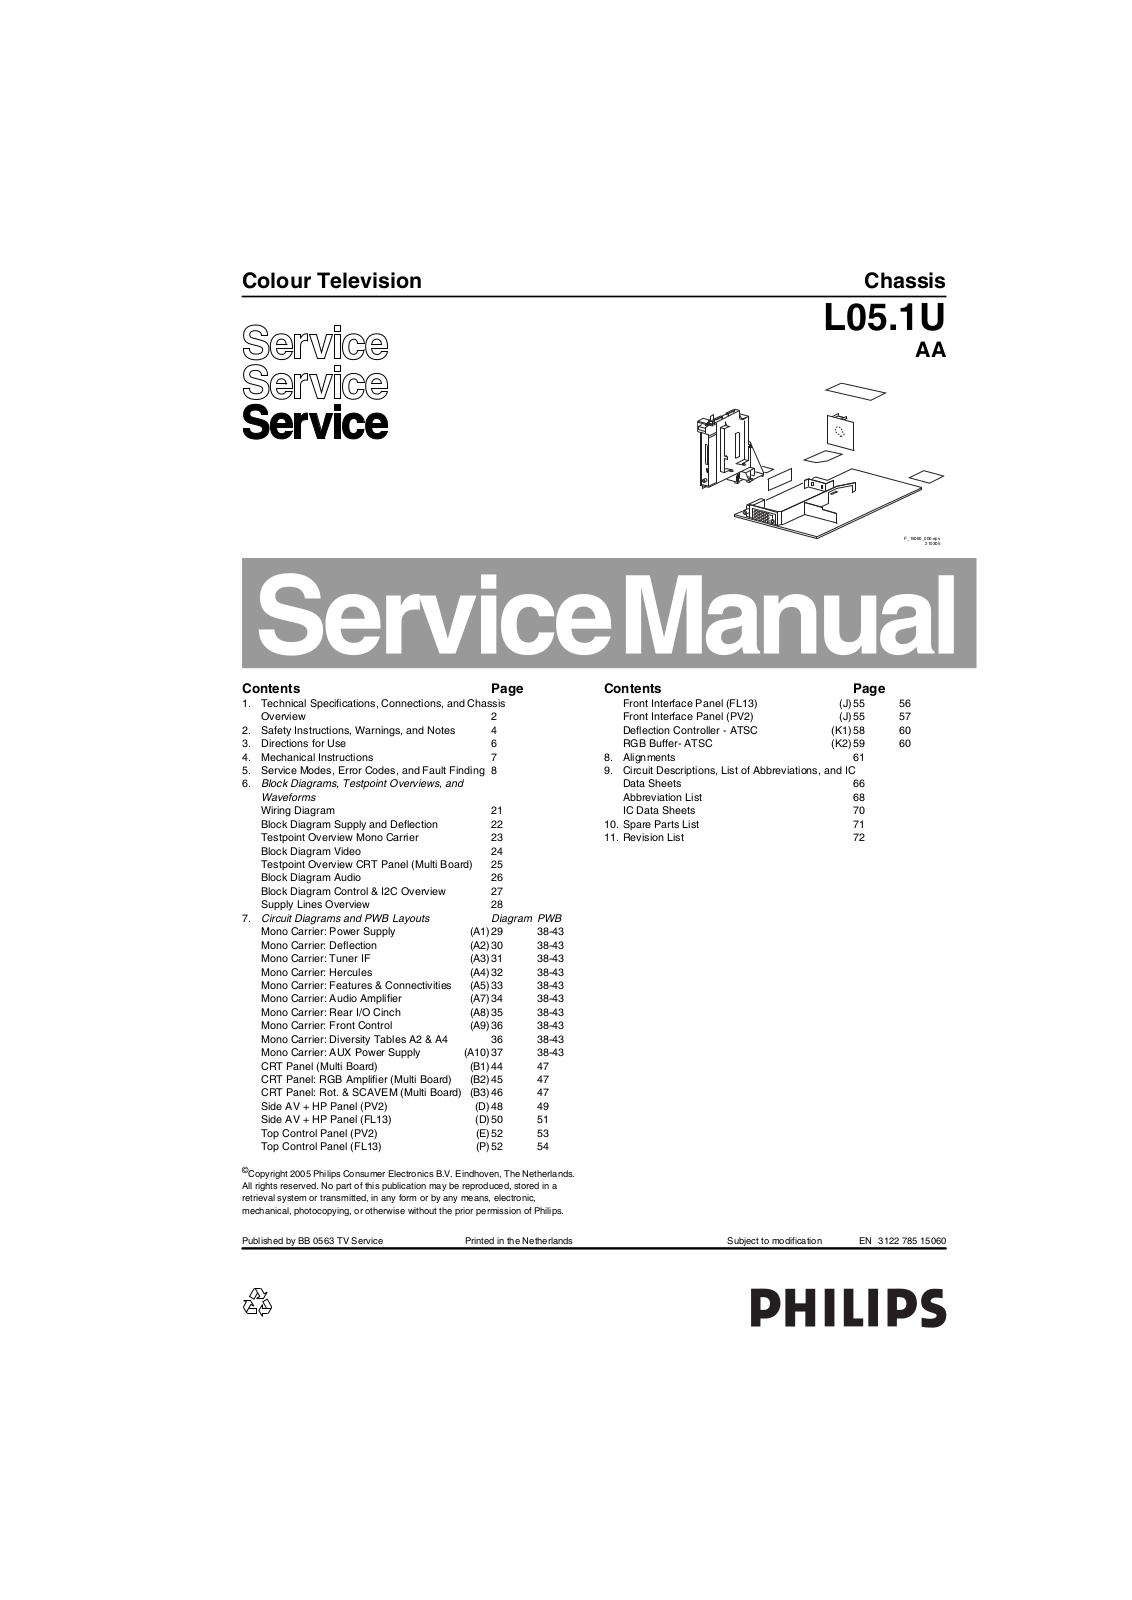 philips L05.1U AA Service Manual